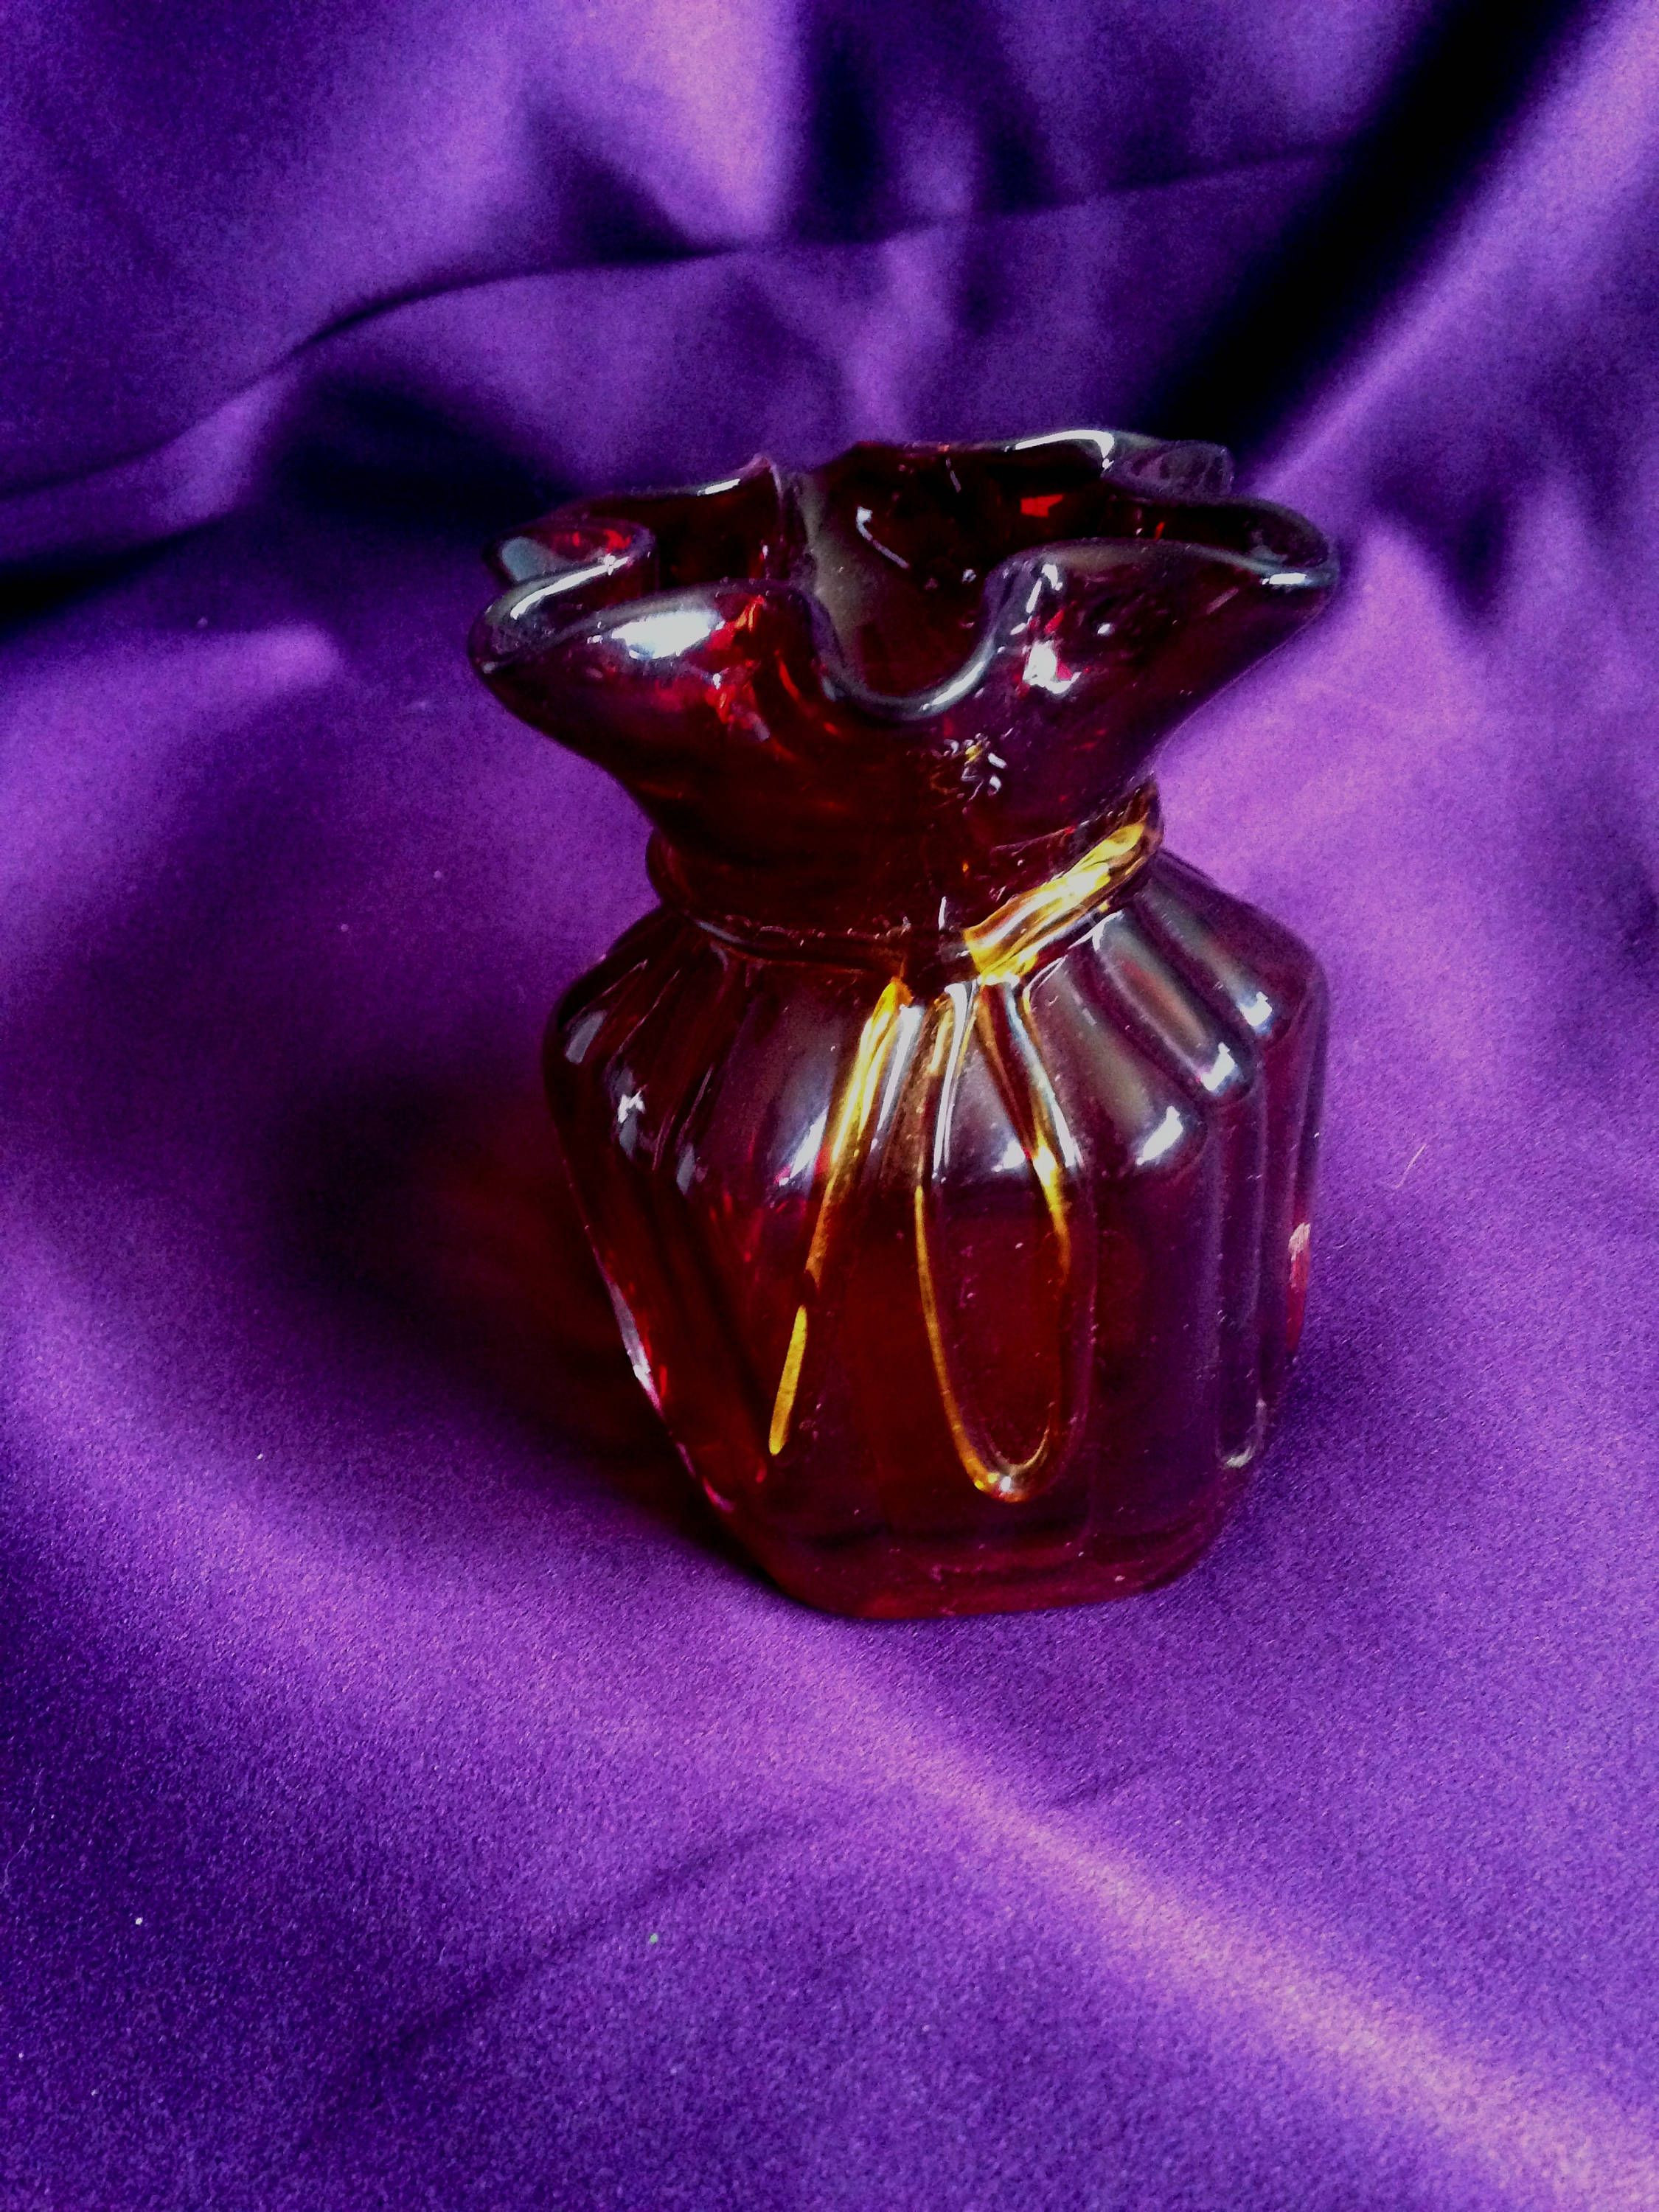 19 Fabulous Purple Swirl Vase 2023 free download purple swirl vase of vintage ruby glass vase ruffled edge golden bow art glass vase pertaining to vintage ruby glass vase ruffled edge golden bow art glass vase at